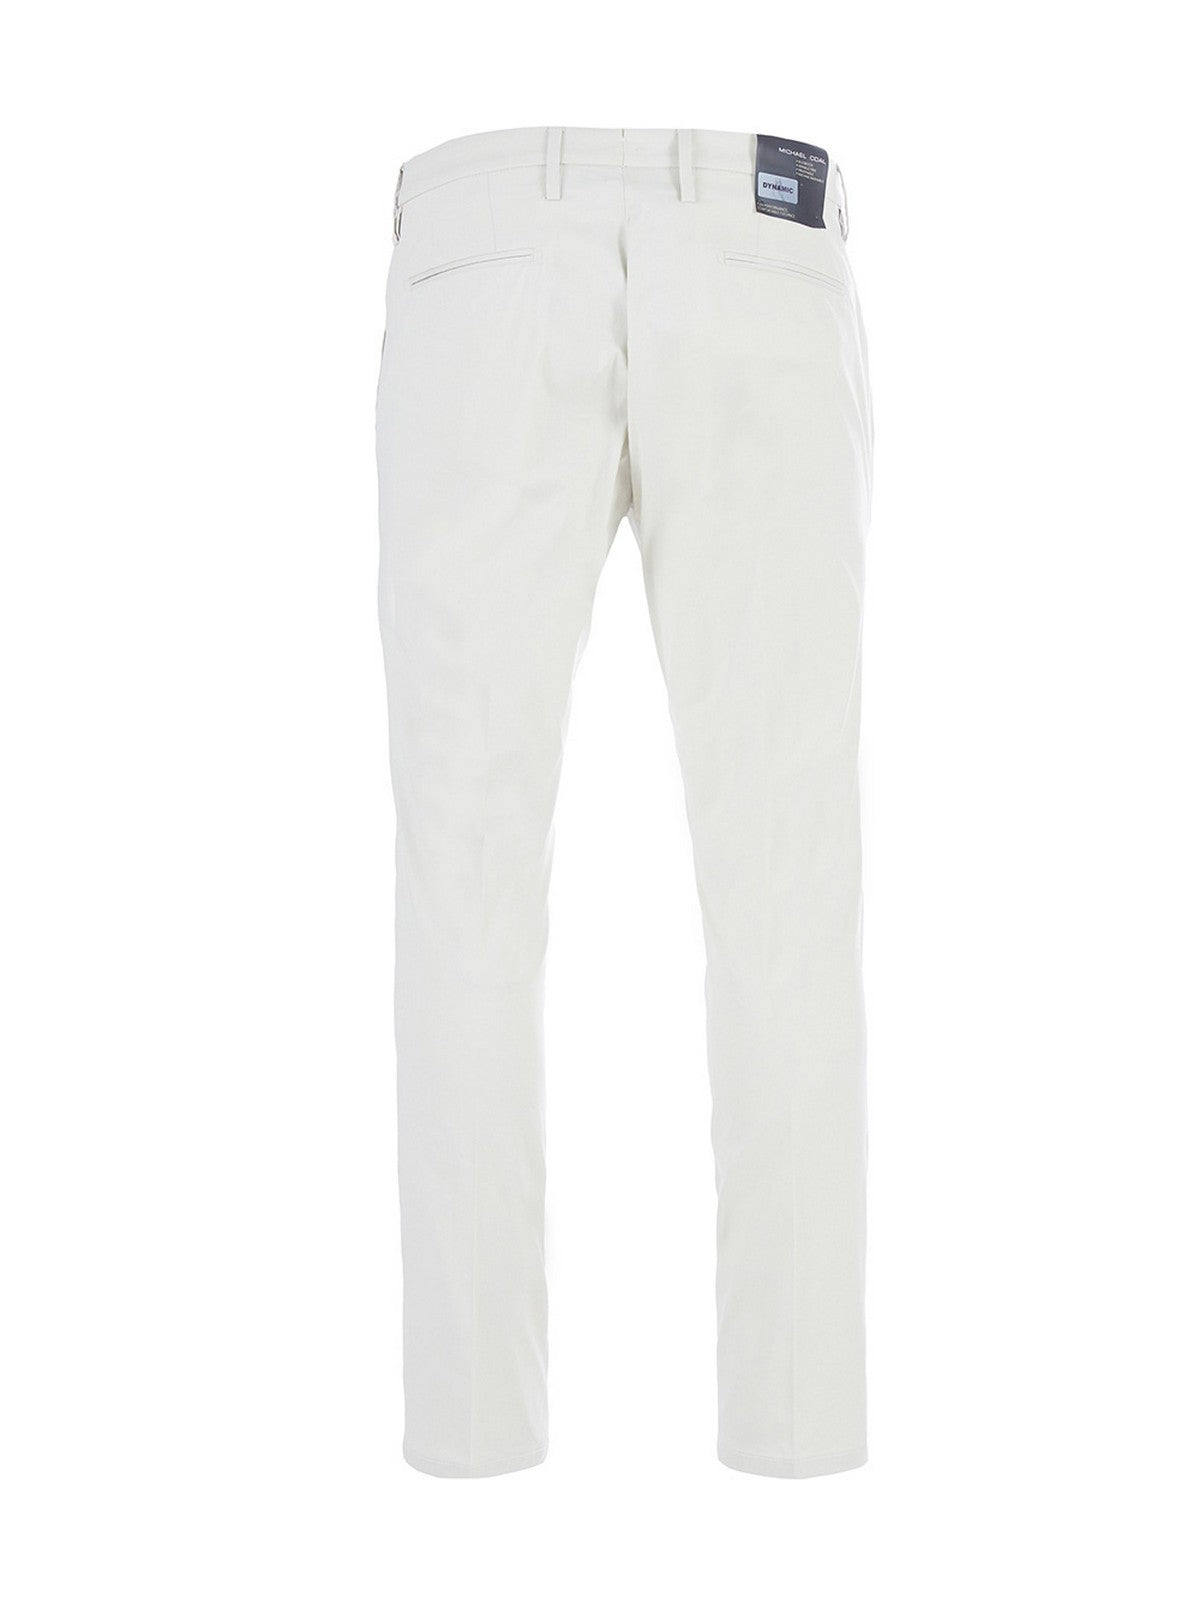 MICHAEL COAL Pantalone Uomo Mc-Brad capri MCBRA2563S23C 192 Bianco